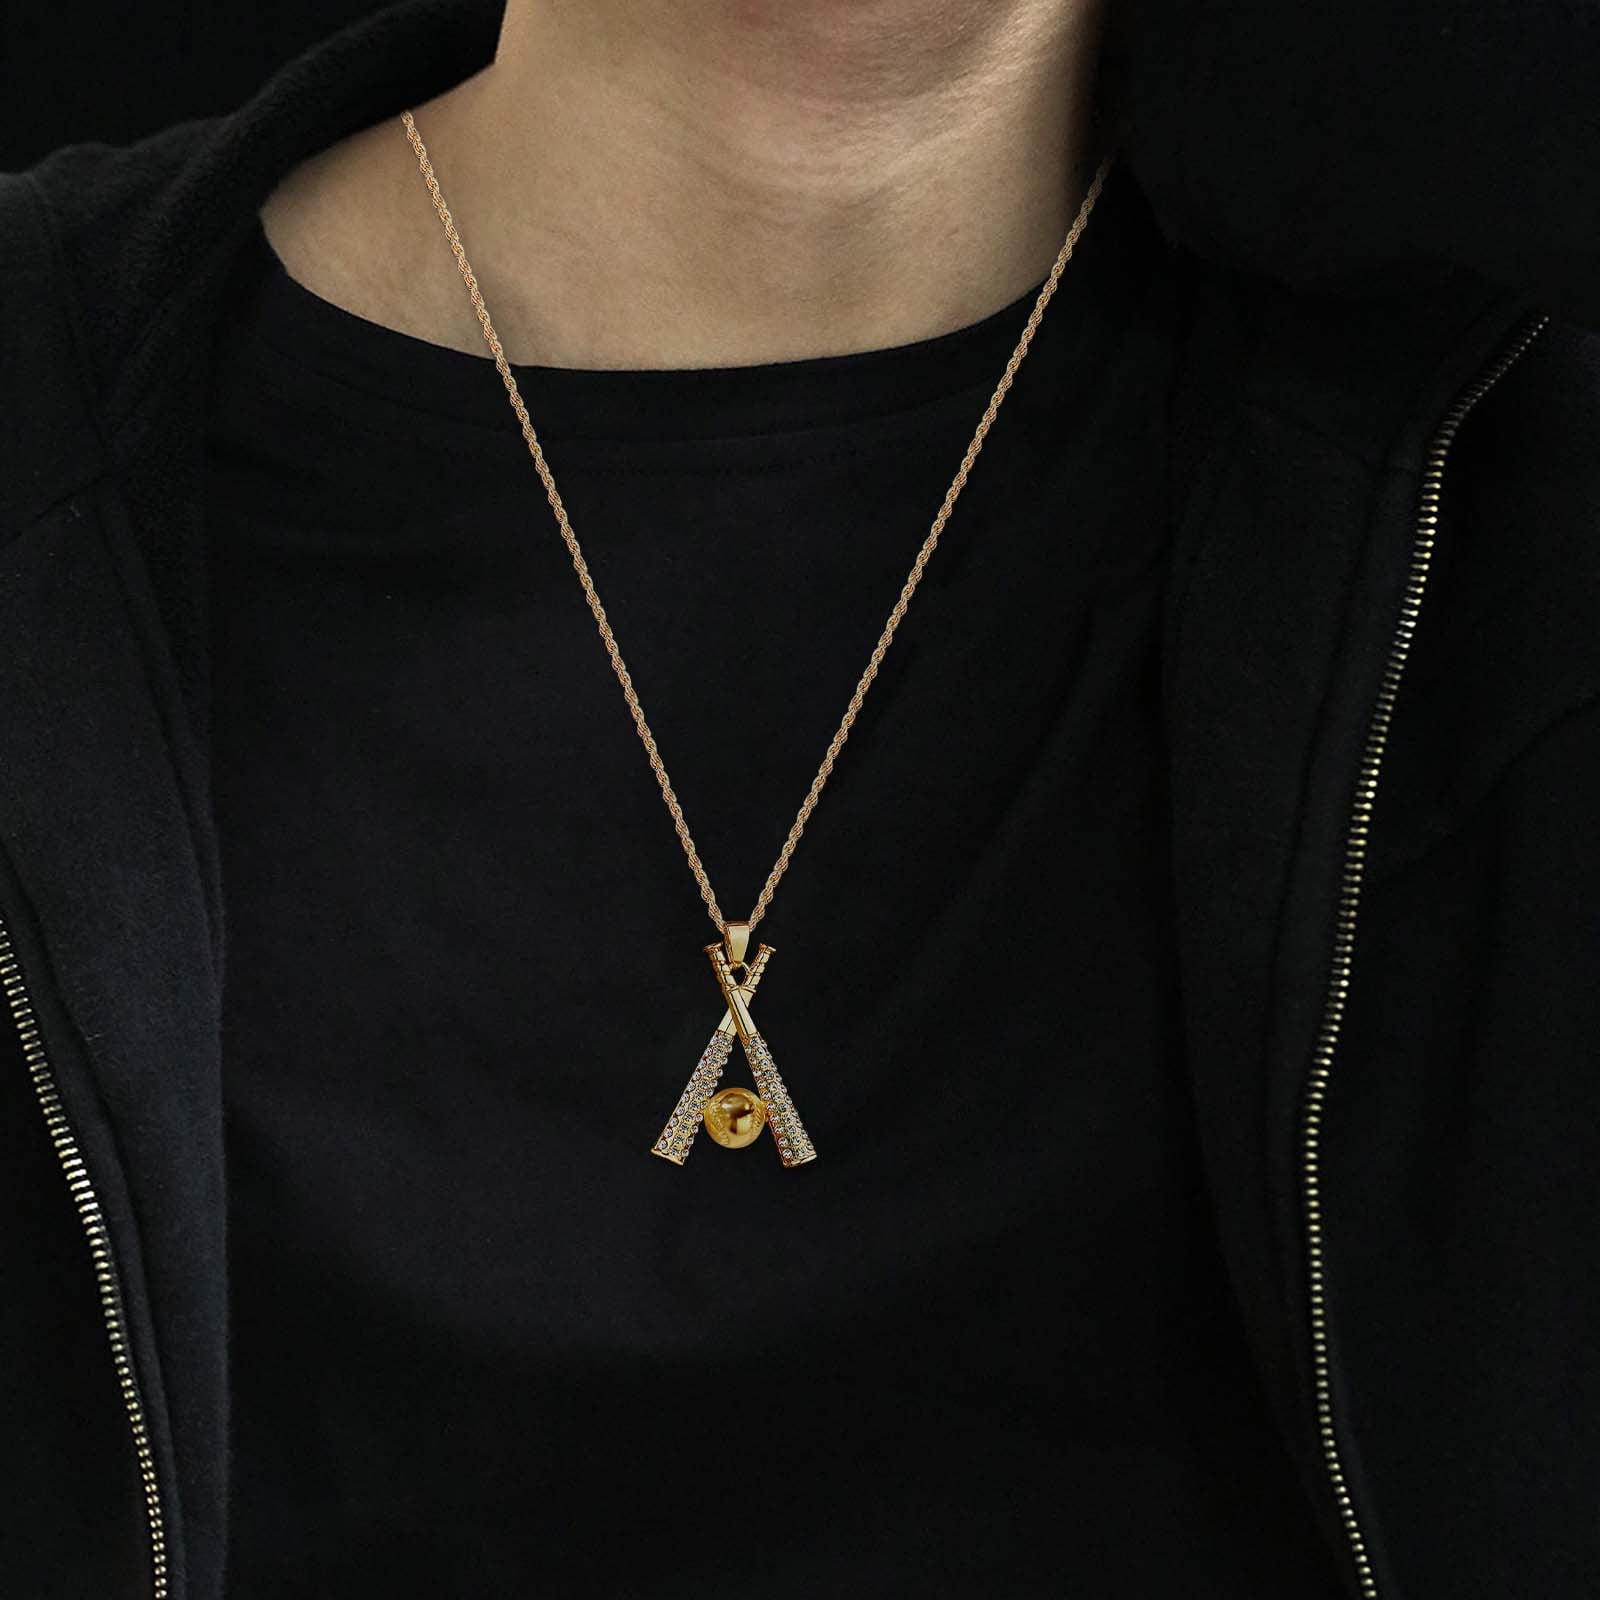 Minimal And Elegant Obtuse Triangle Necklace -Gold Electroplated